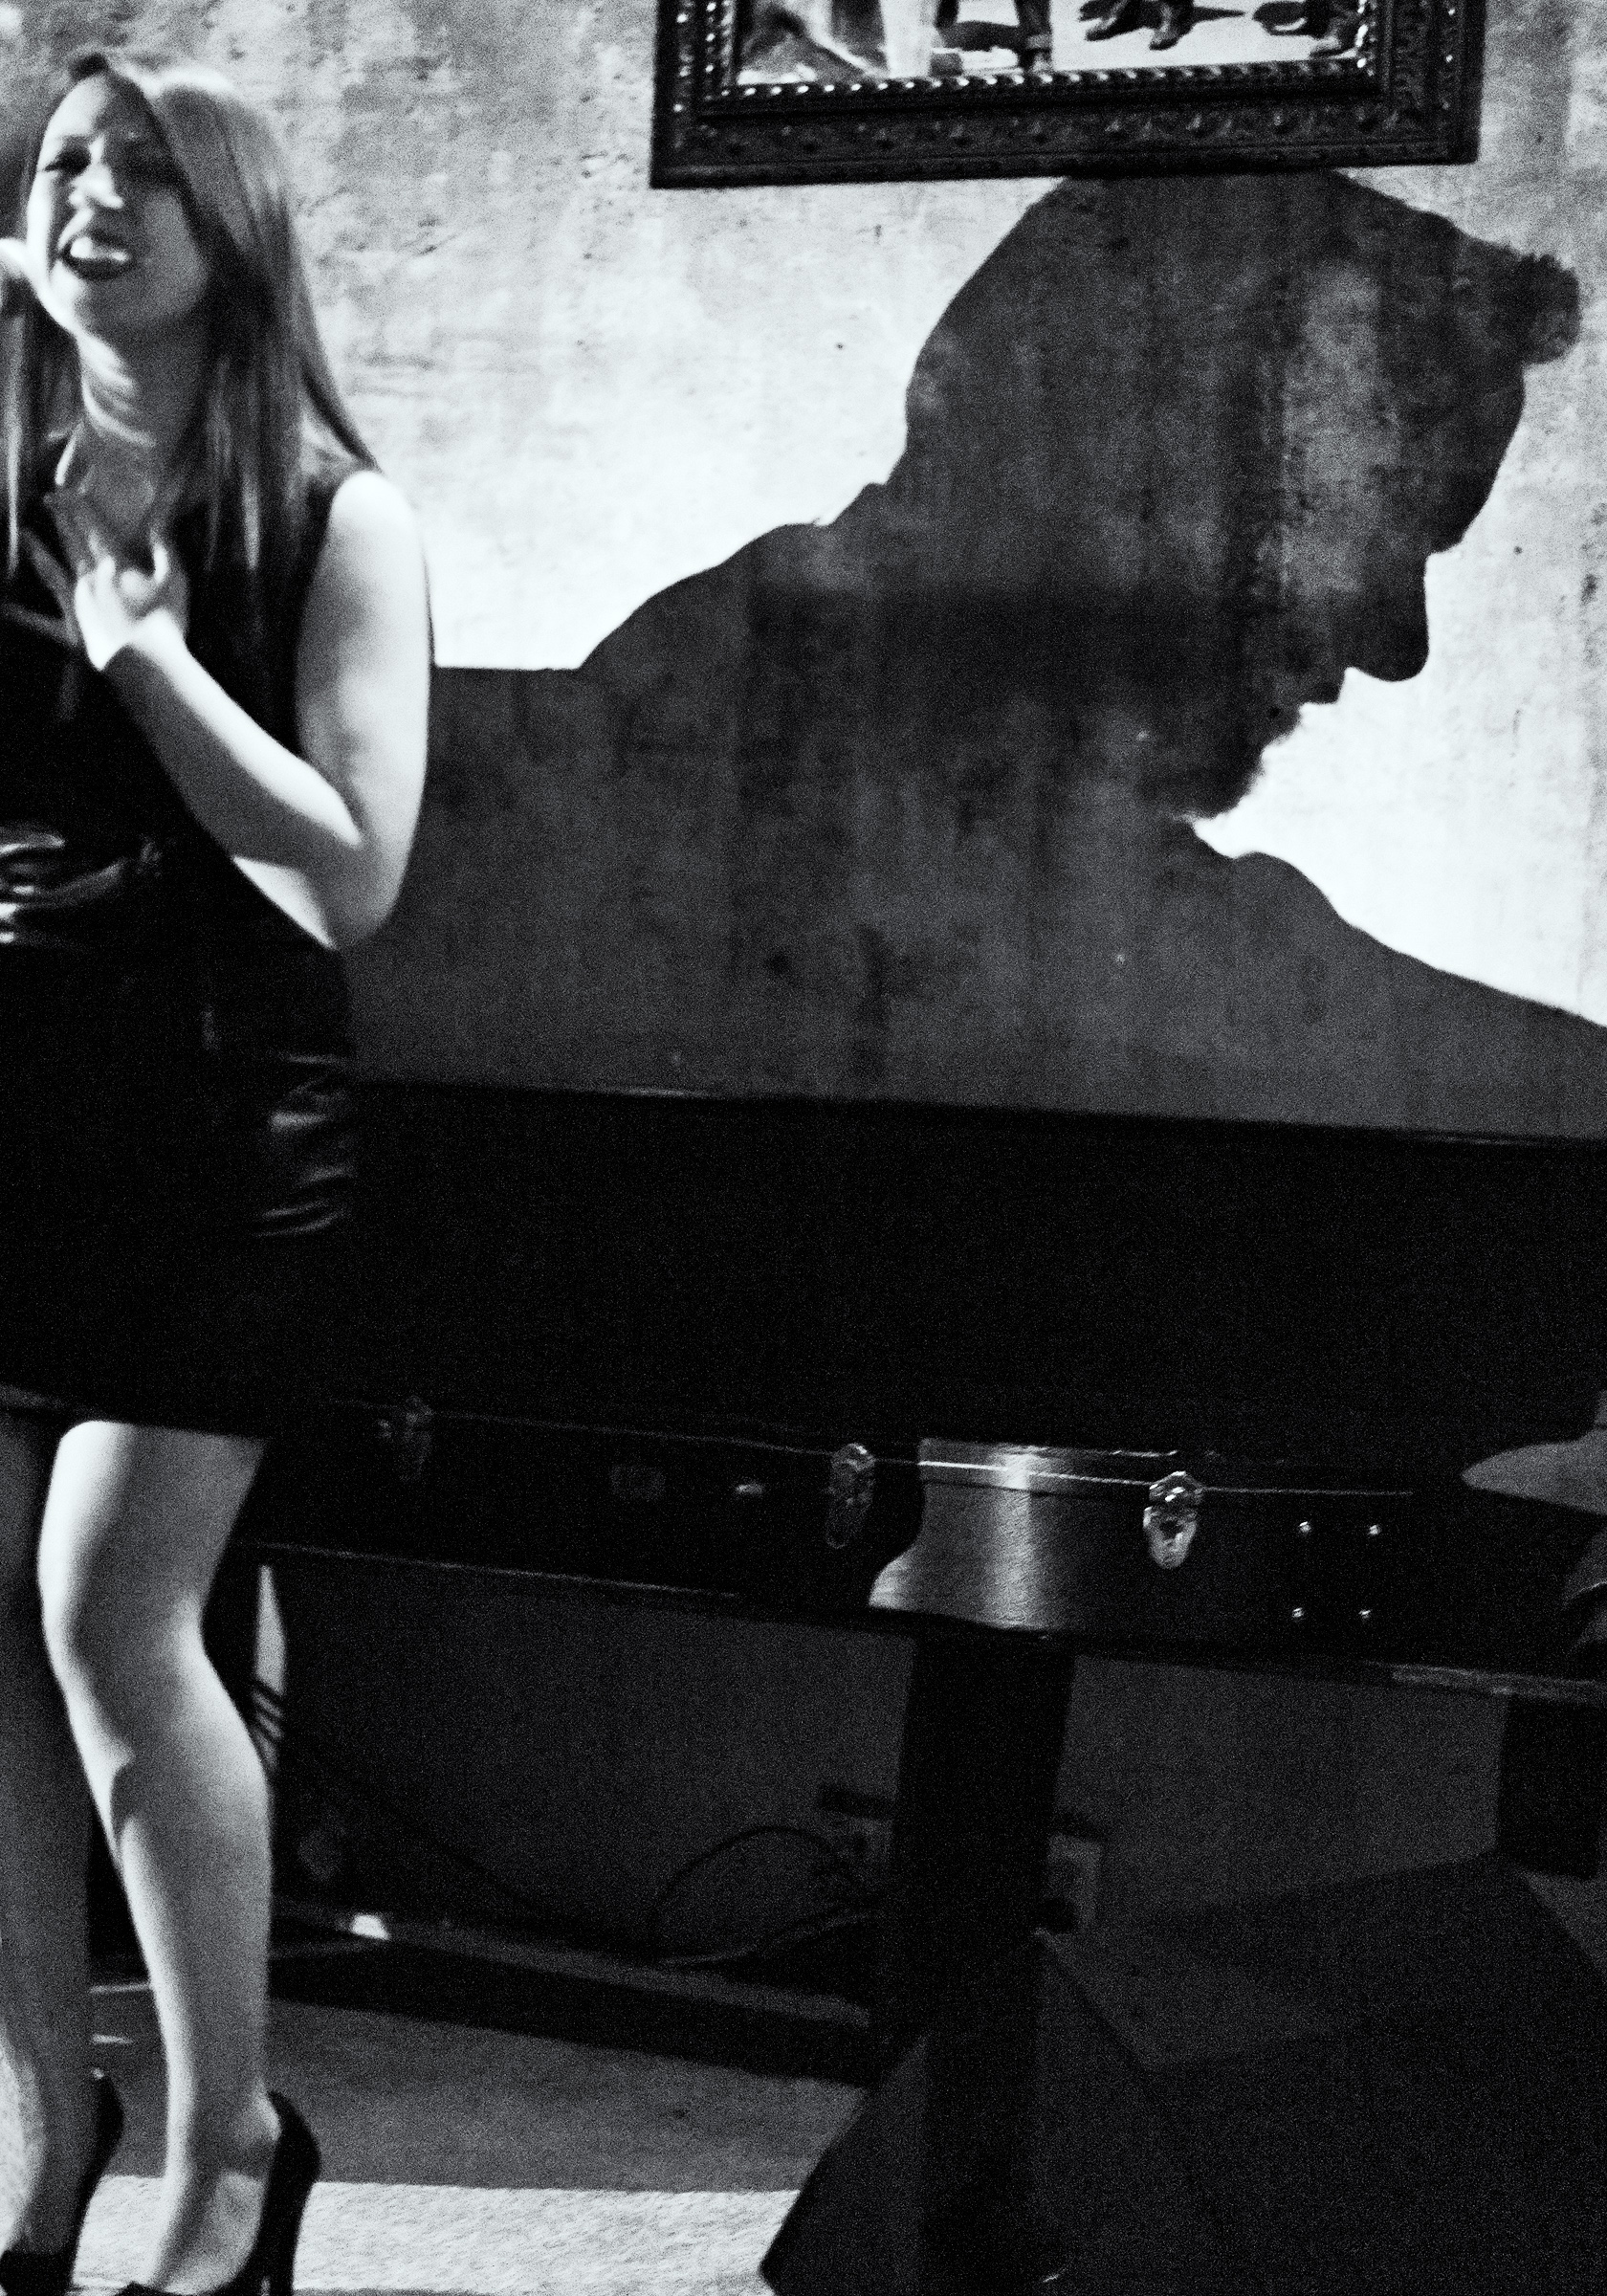 Lauren Miller with Jim Cahoon silhouette Pearl Lounge